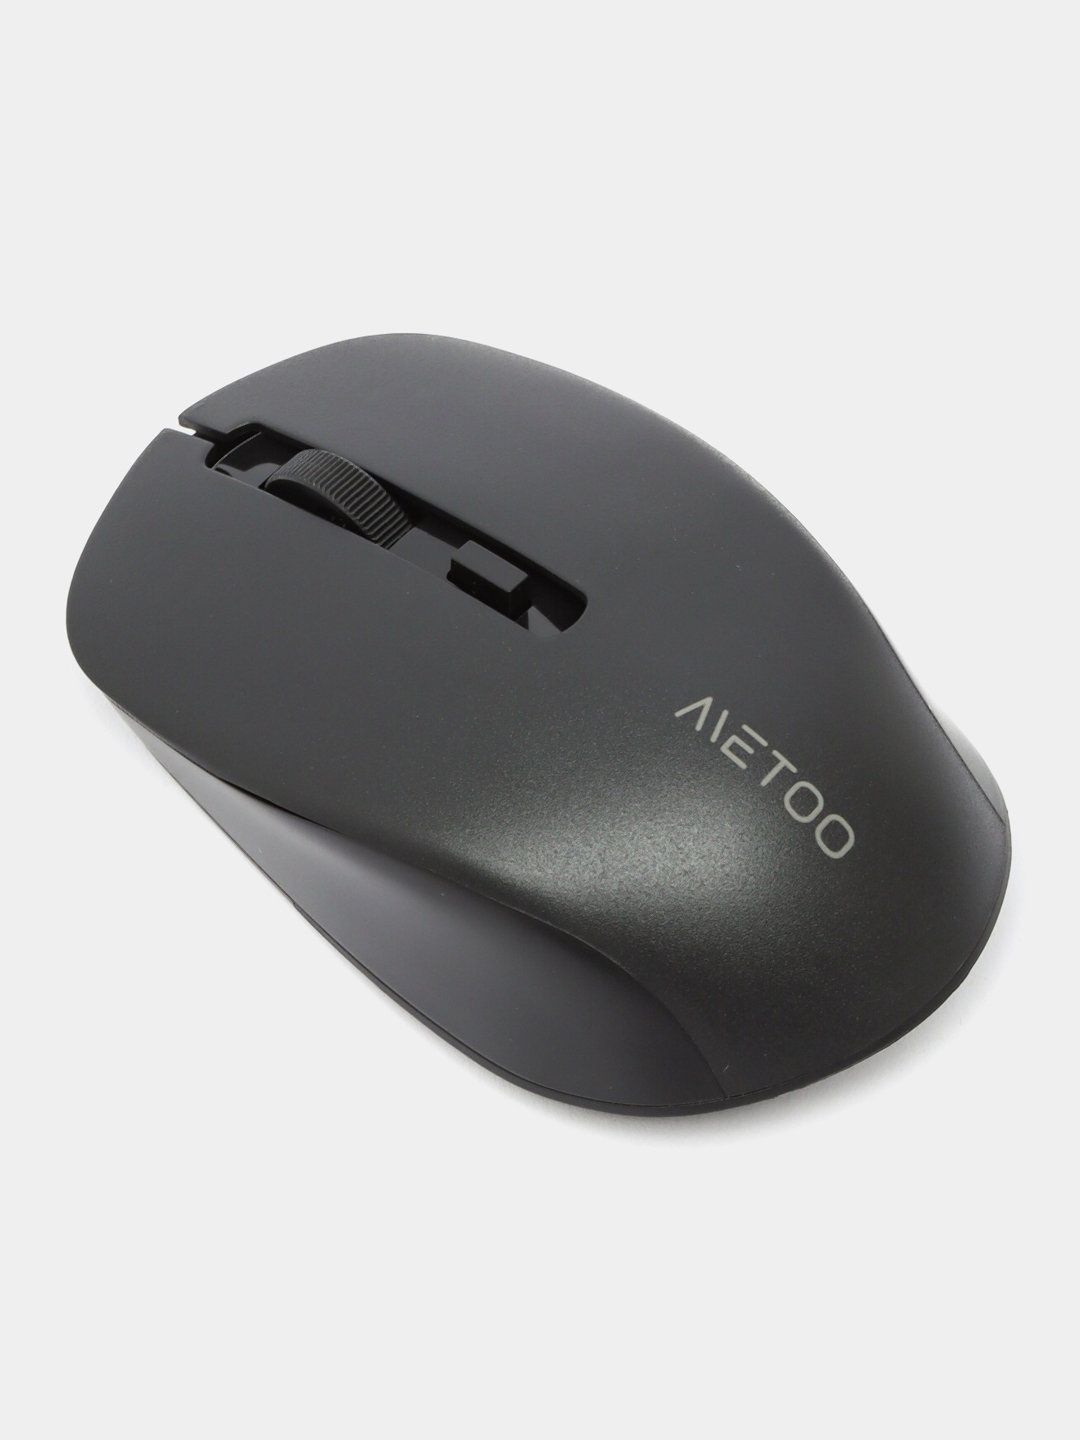 Оптом, компьютерная мышка блютузли бесшумная мышь Metoo E0 Bluetooth